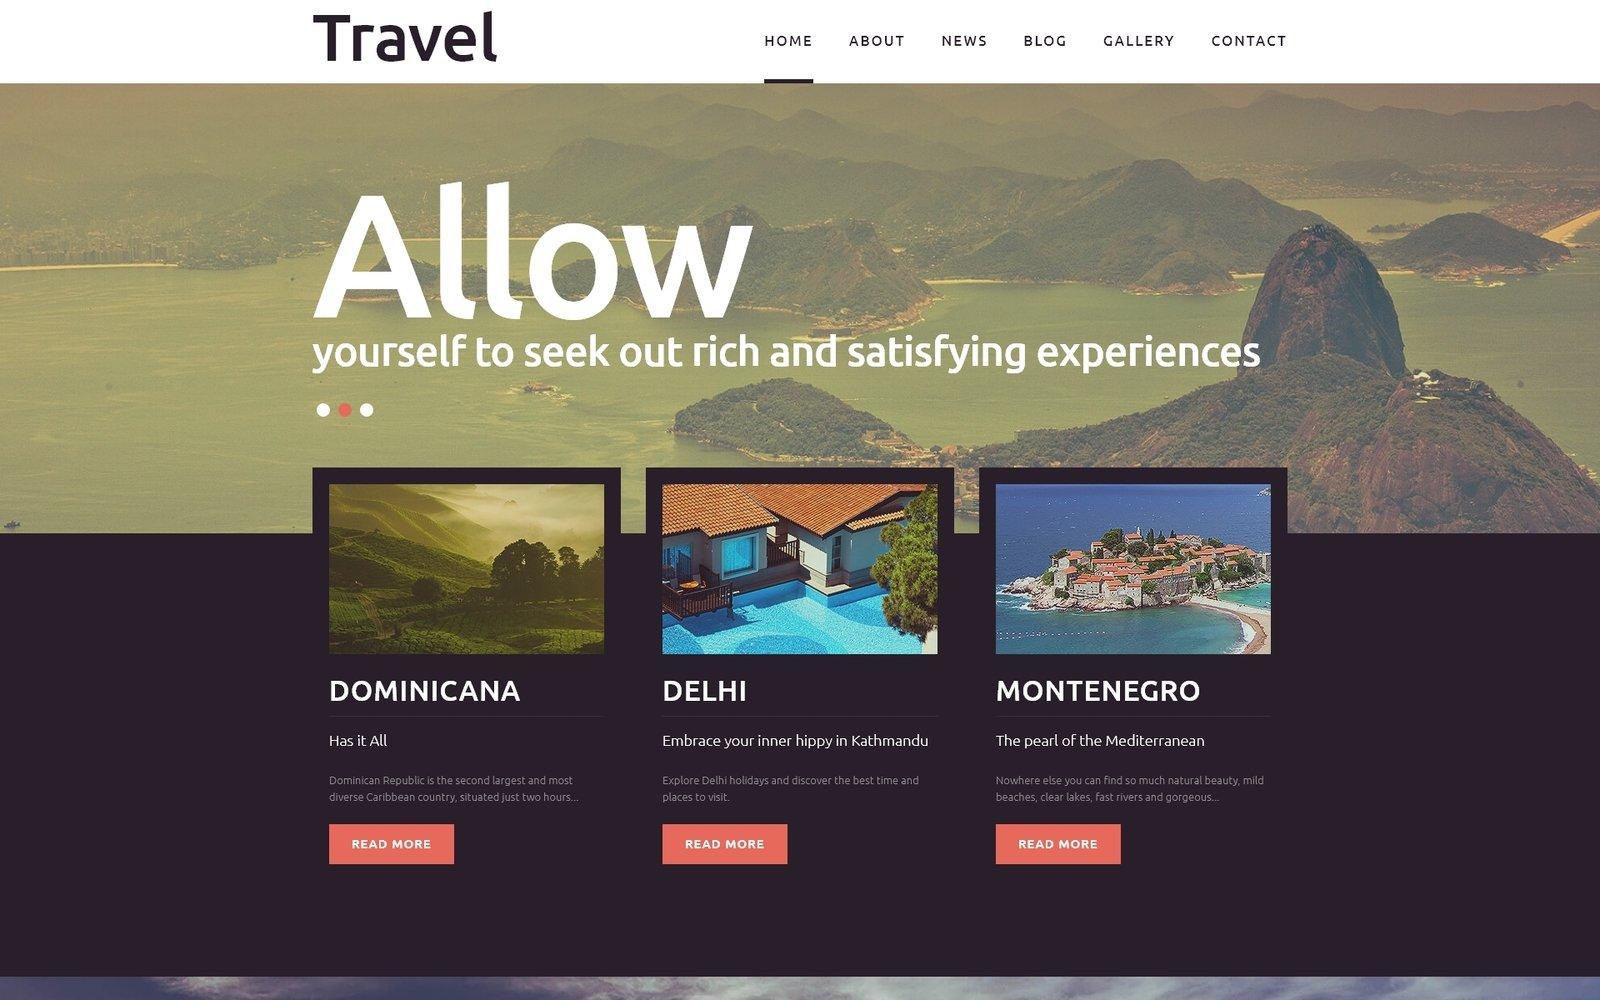 Шаблон Joomla Travel - Fancy Tourism Blog Joomla Template